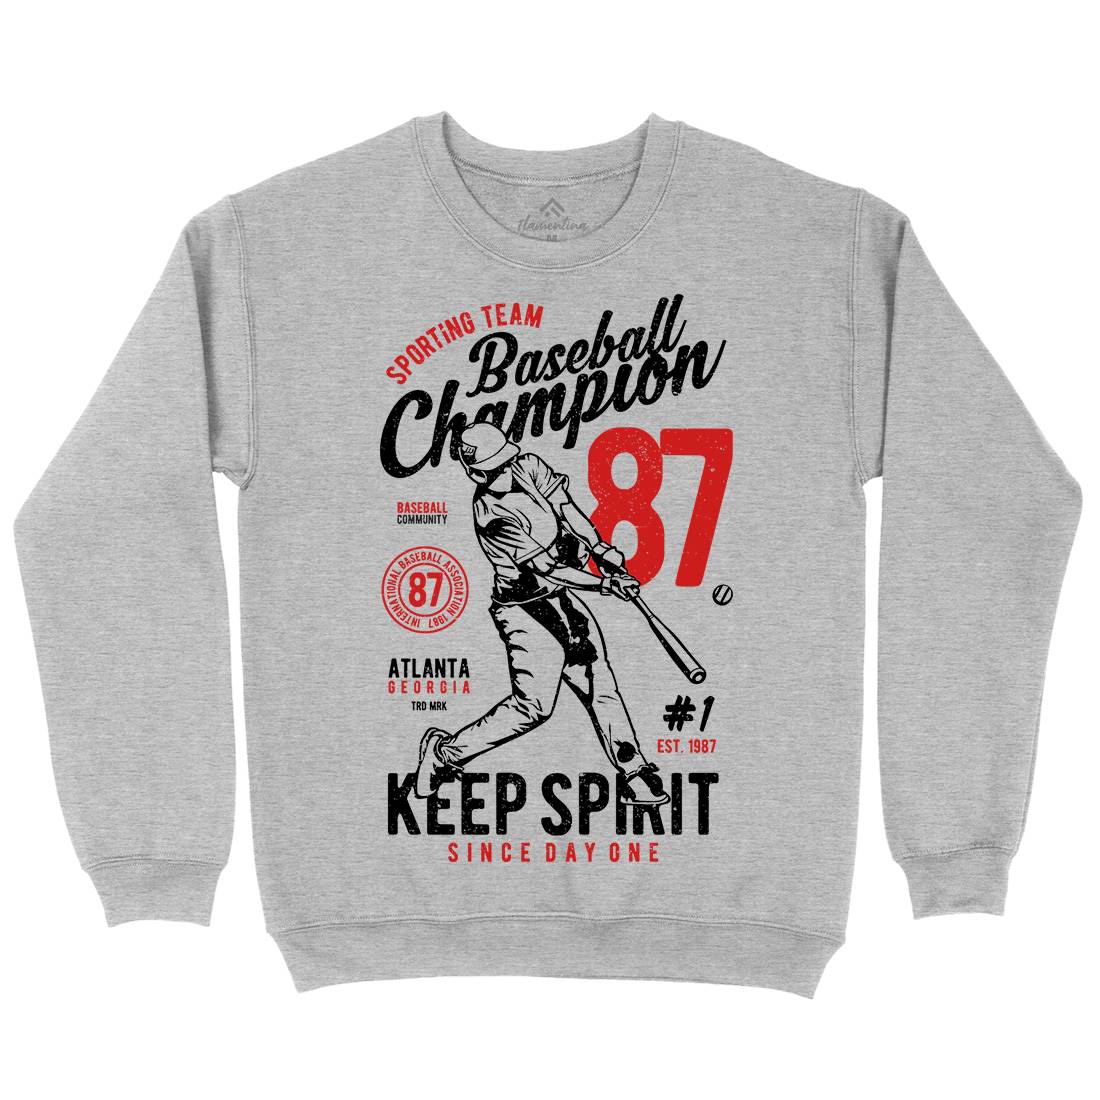 Baseball Champion Mens Crew Neck Sweatshirt Sport A616